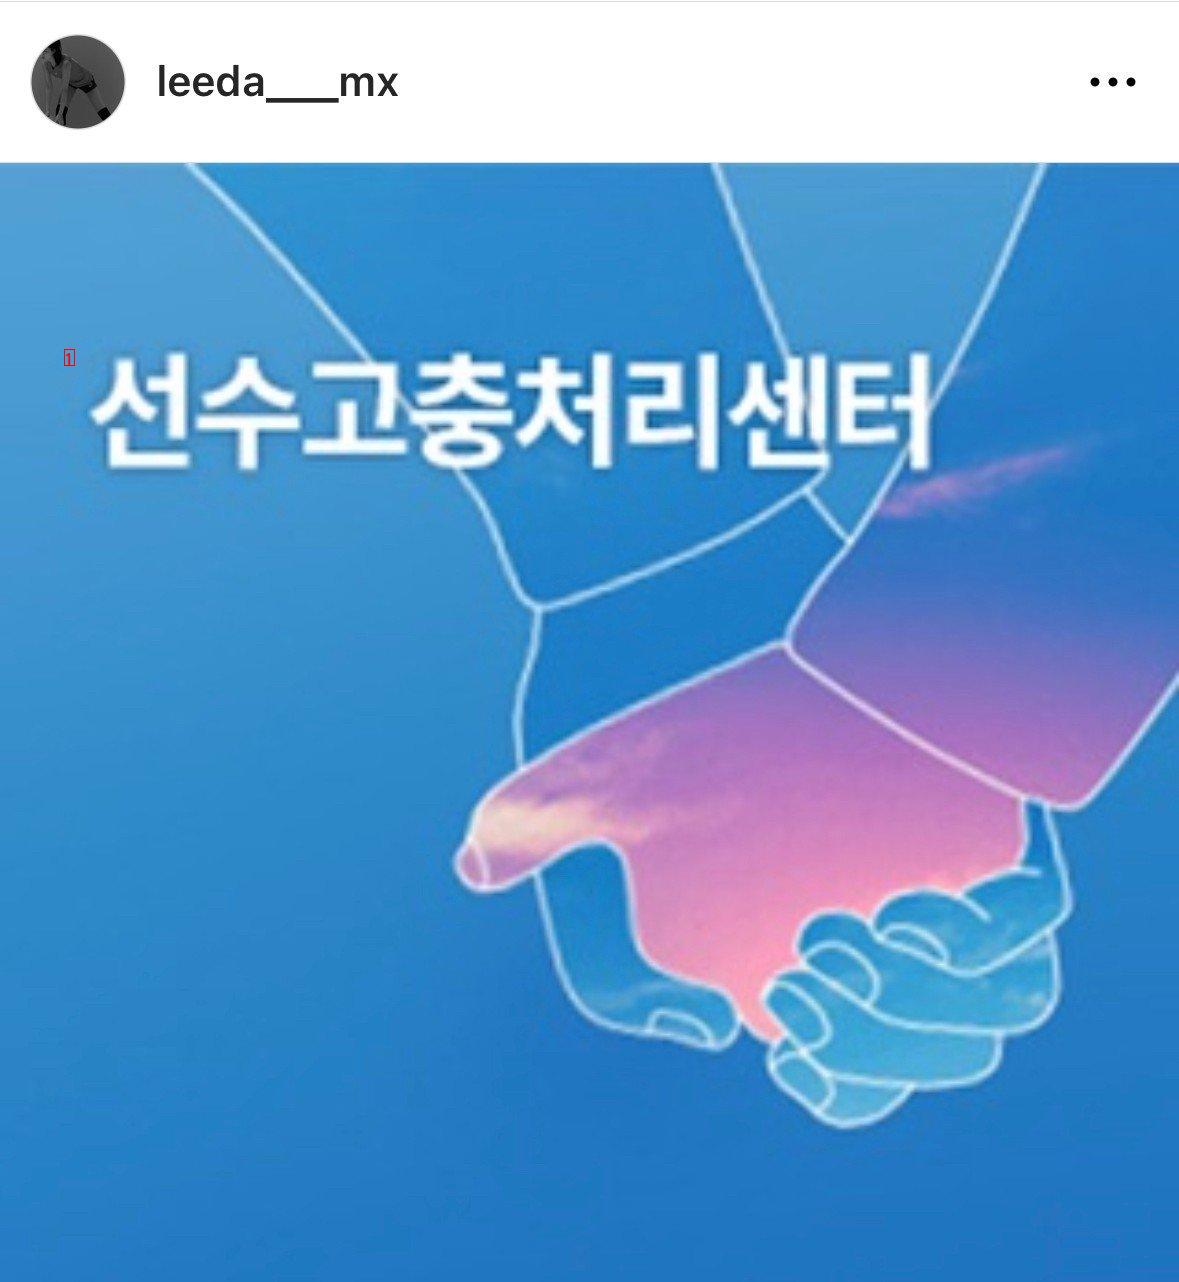 Volleyball player Lee Da-young's Instagram update.jpg